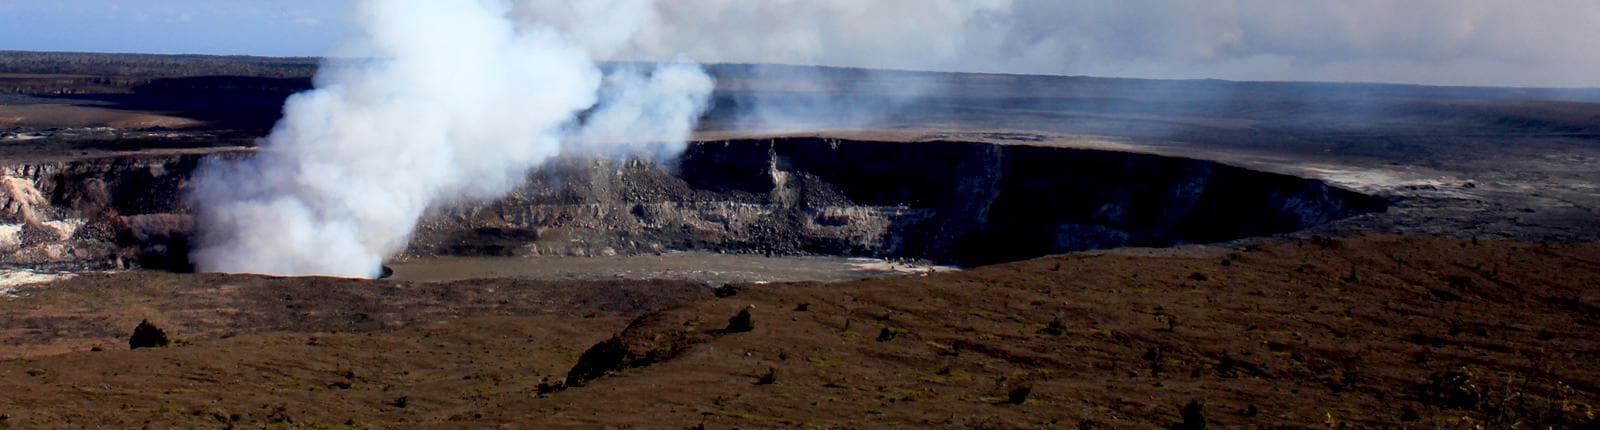 A lava tube emitting thick smoke in Hilo, Hawaii